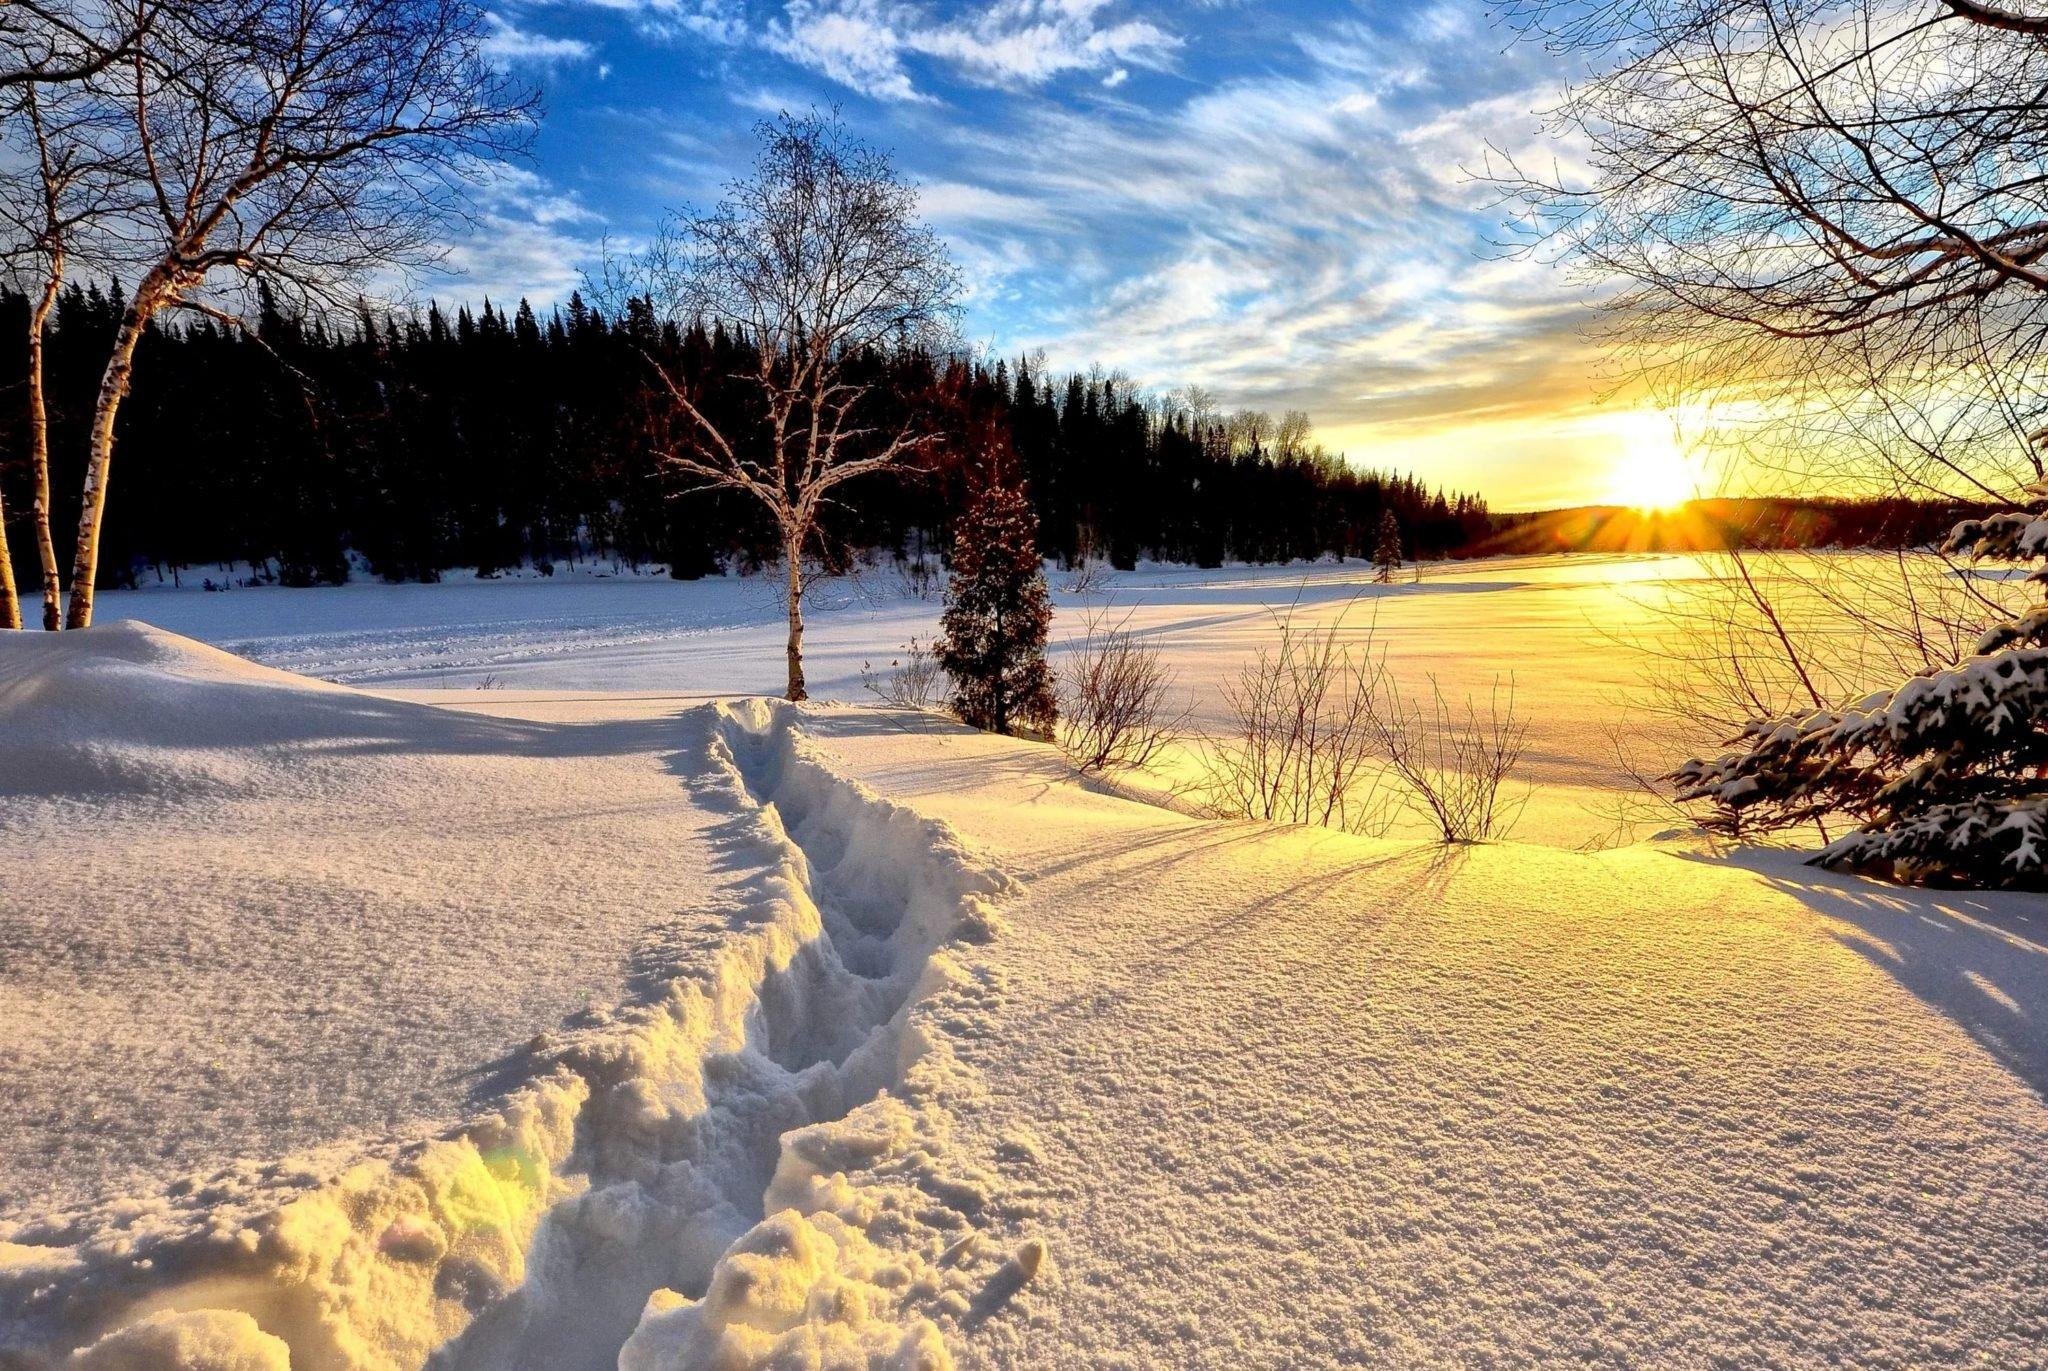 Зима Солнце Снег - Бесплатное фото на Pixabay - Pixabay